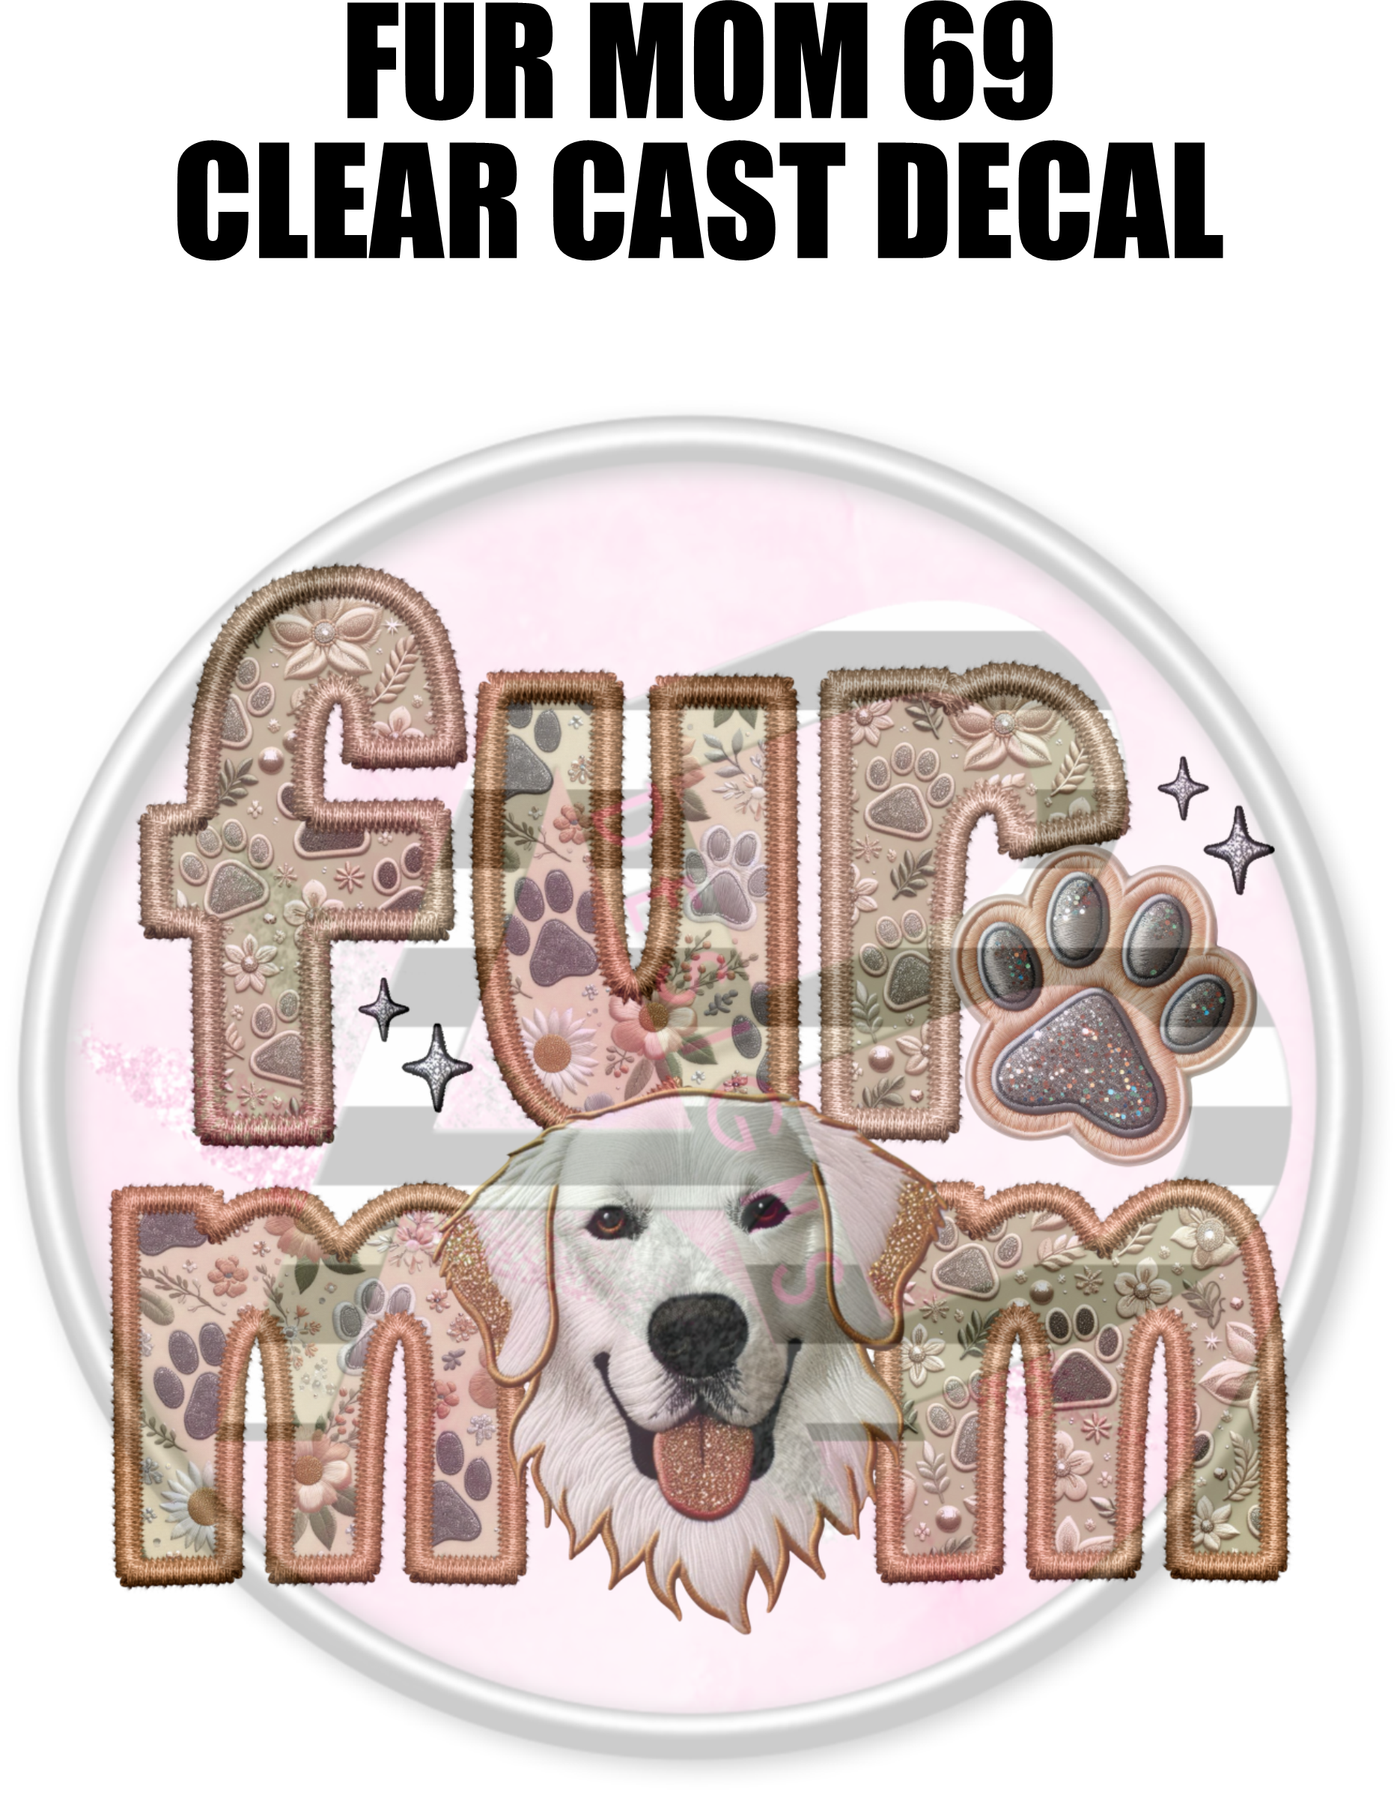 Fur Mom 69 - Clear Cast Decal